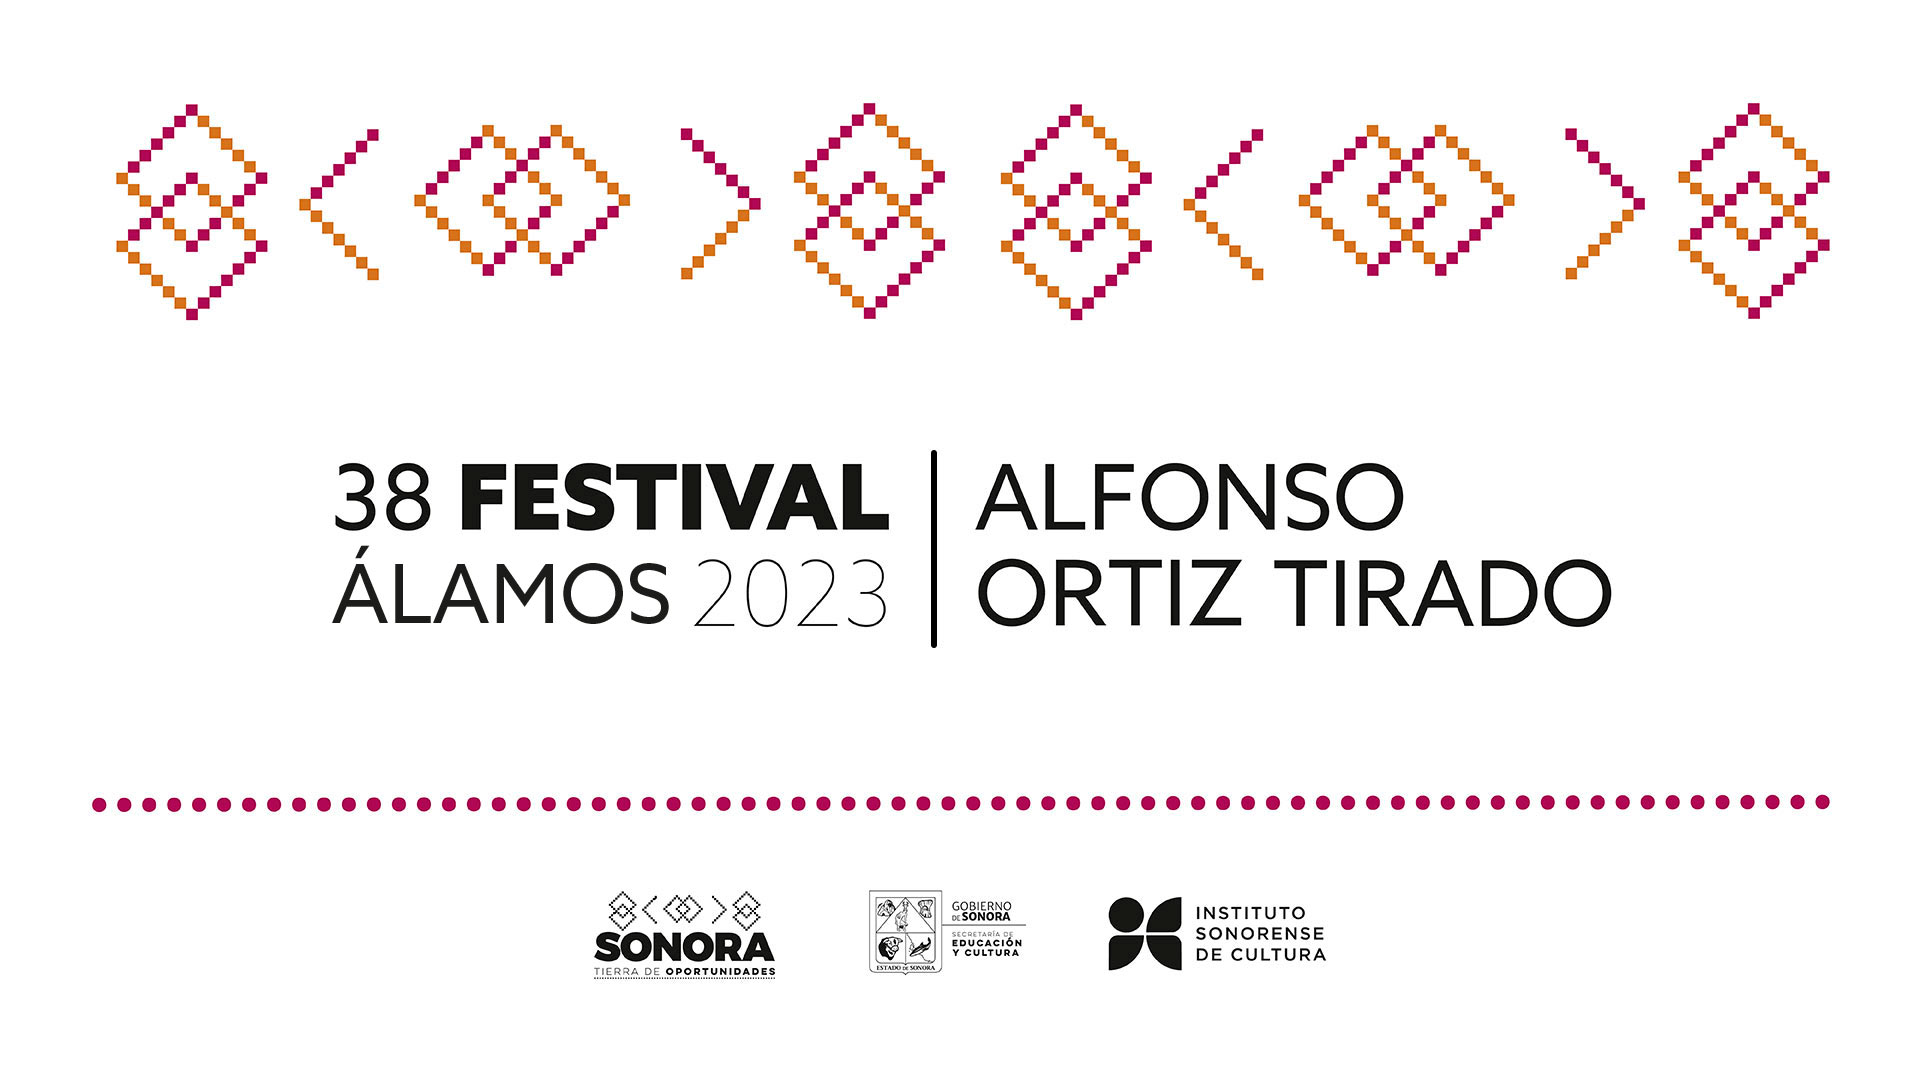 38 FESTIVAL  ALFONSO ORTIZ TIRADO, ÁLAMOS 2023